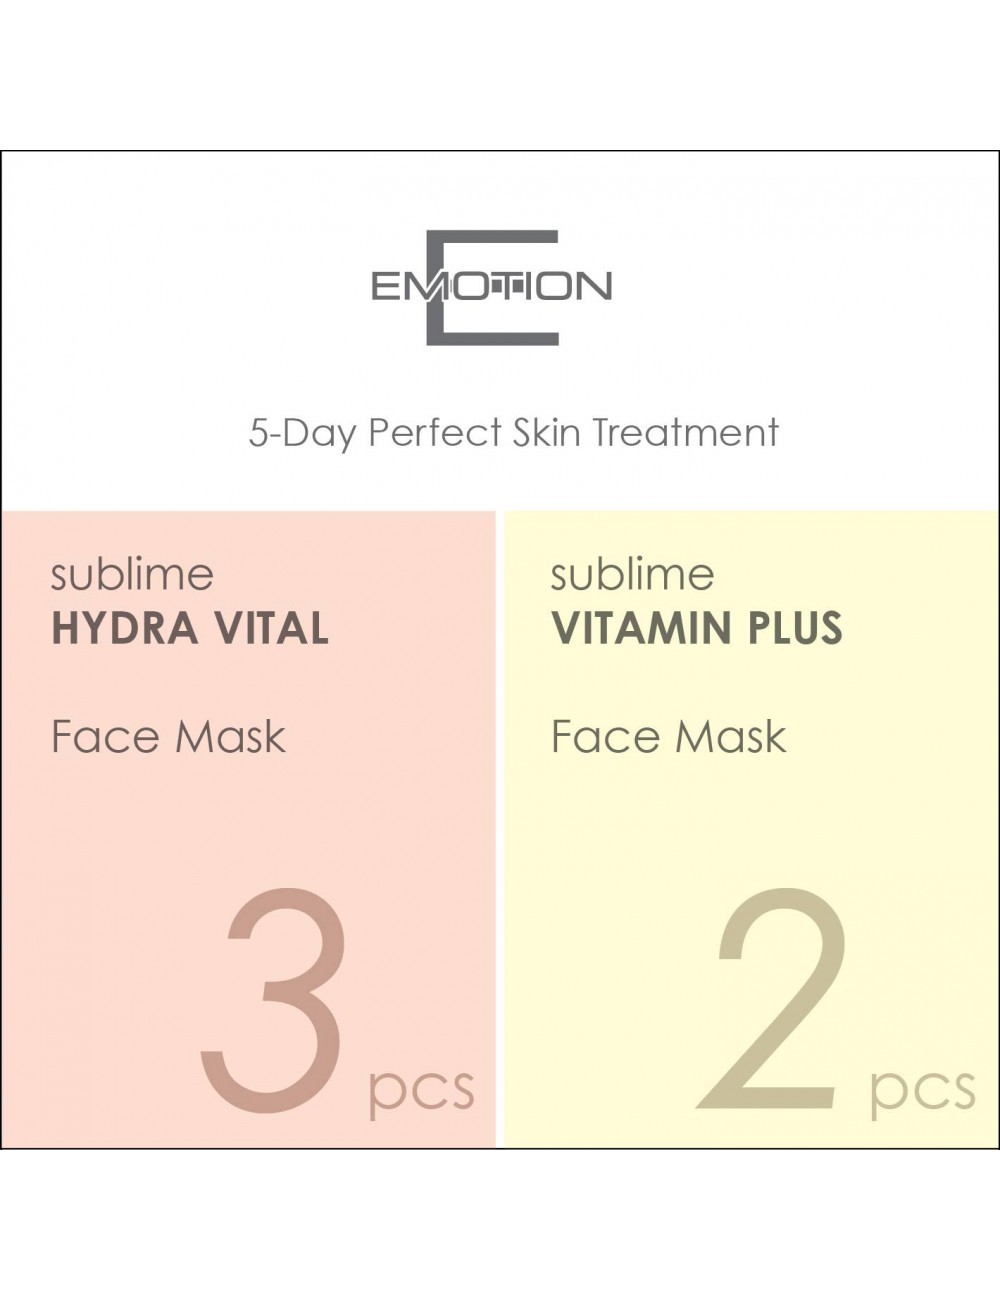 Emotion 5-Day Perfect Skin Treatment Mask (5 pcs)